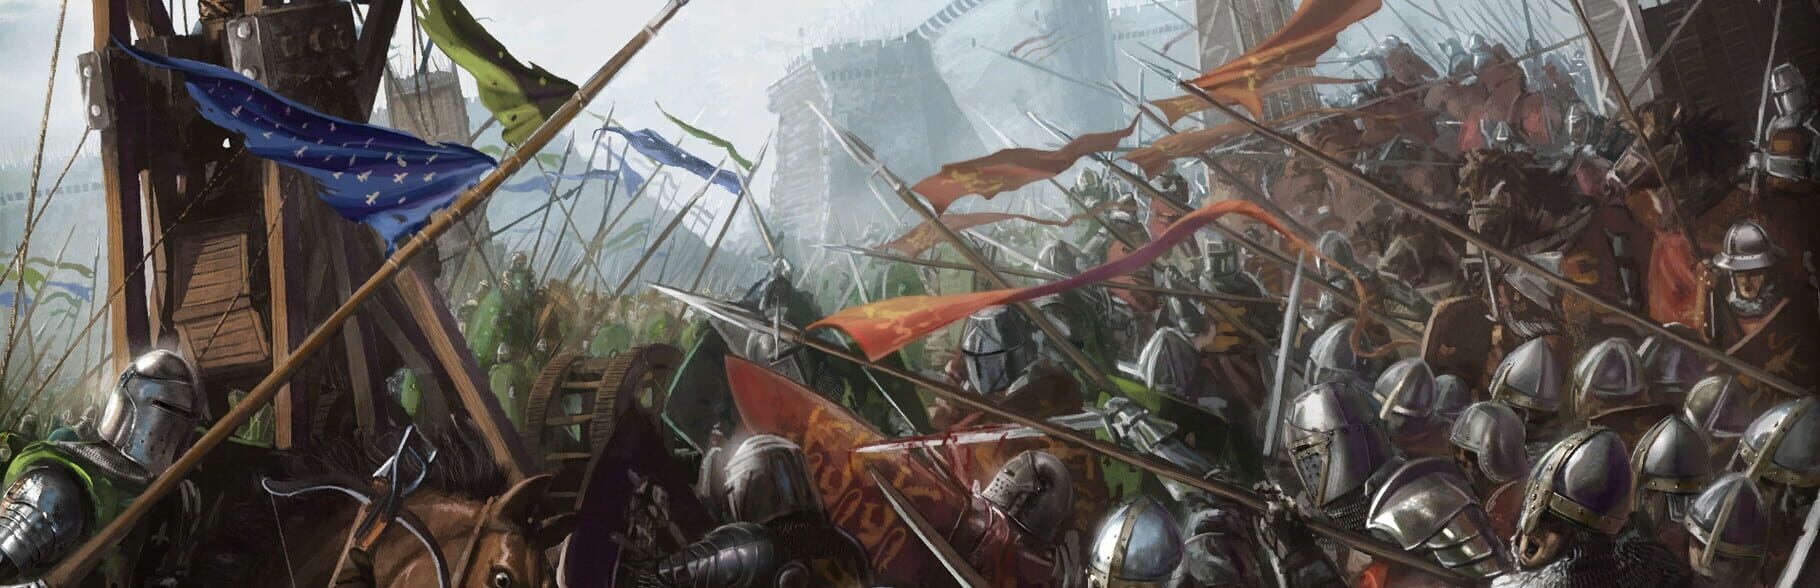 Medieval Kingdom Wars Image